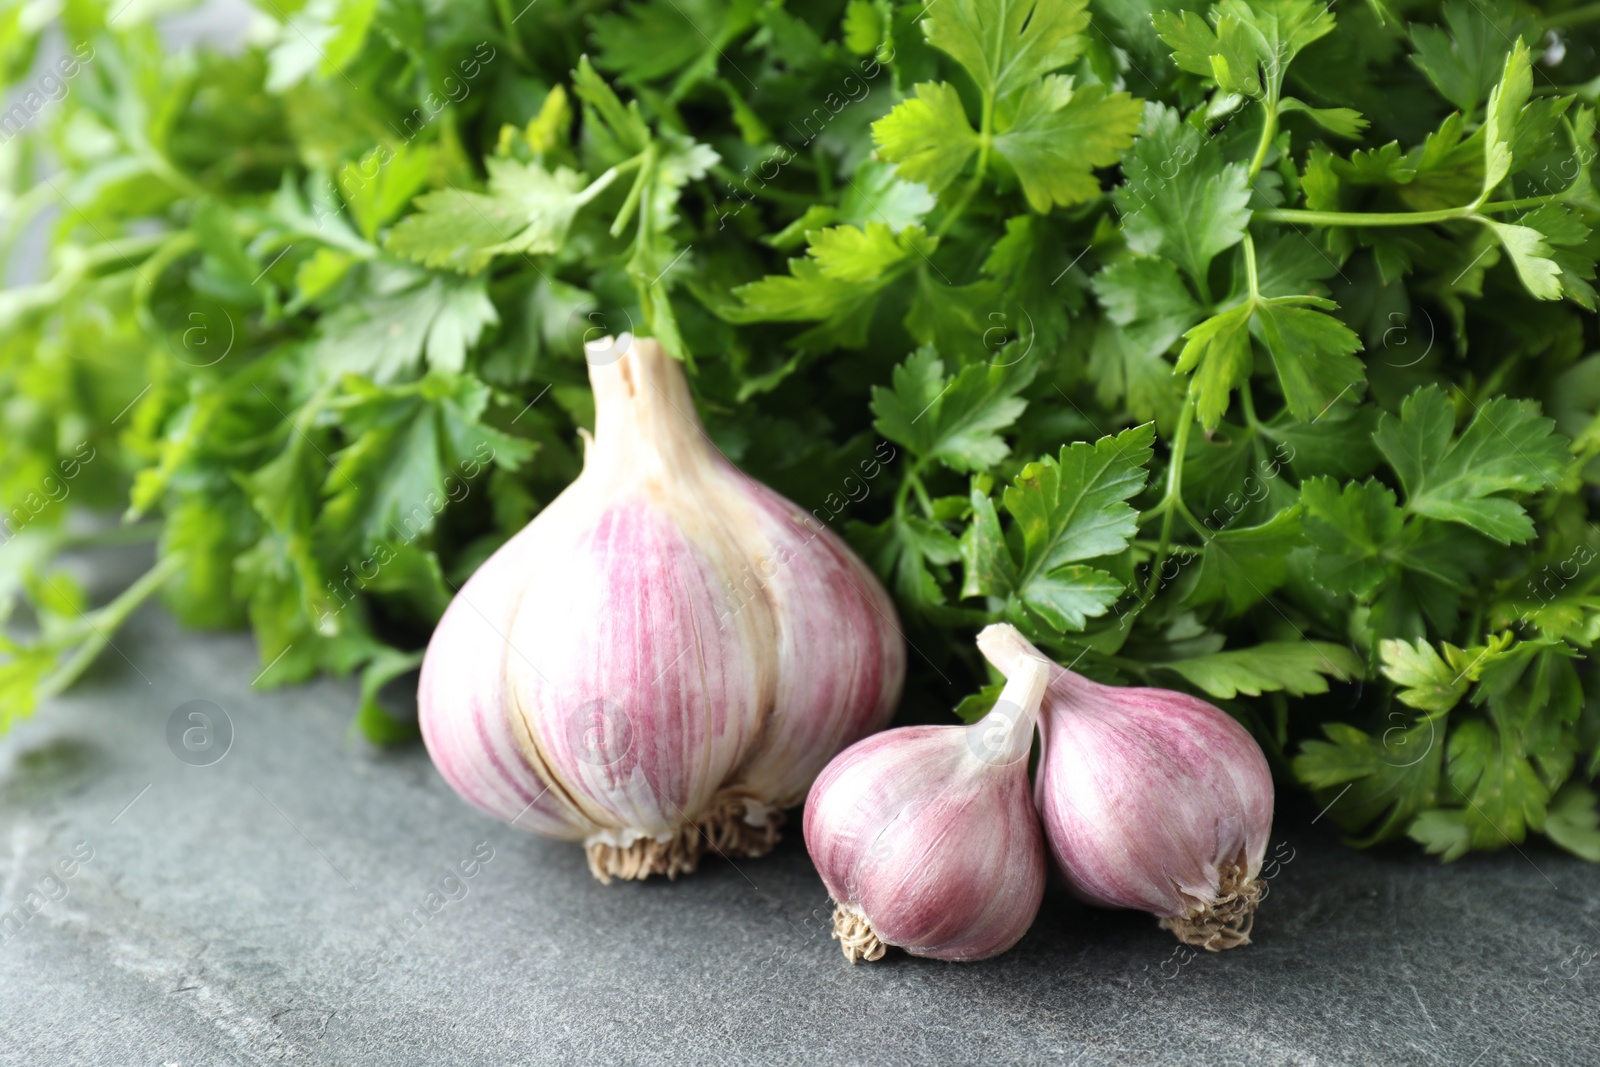 Photo of Fresh raw garlic and parsley on grey table, closeup